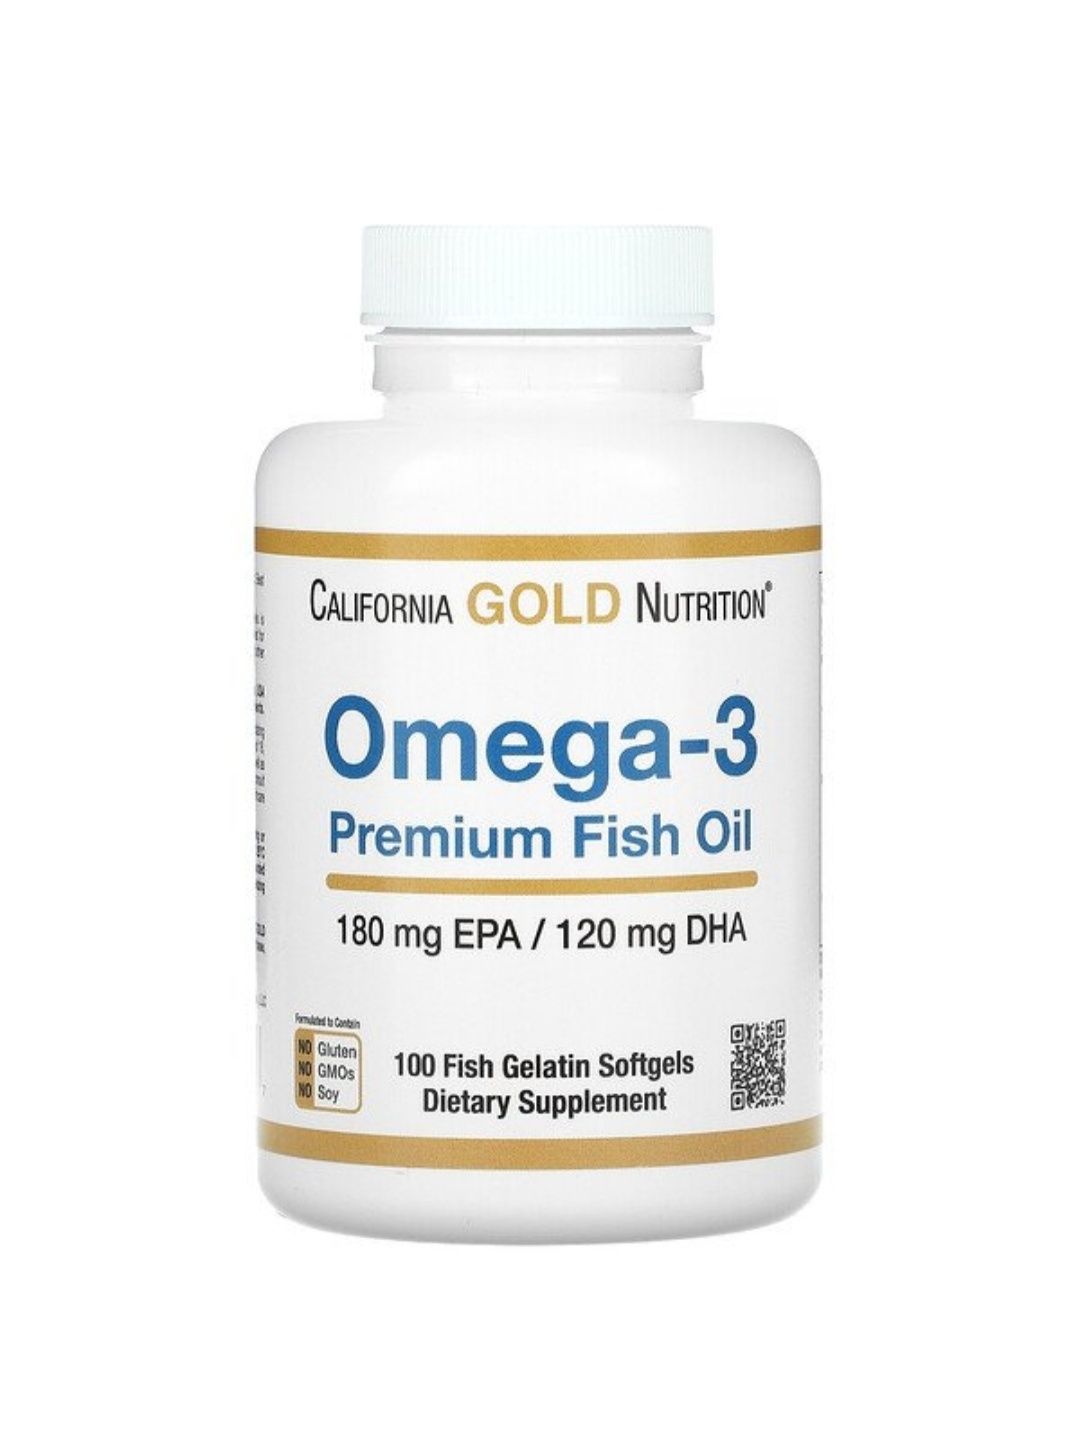 Омега-3 премиум-класса California gold nutrition. Рыбий жир Америка